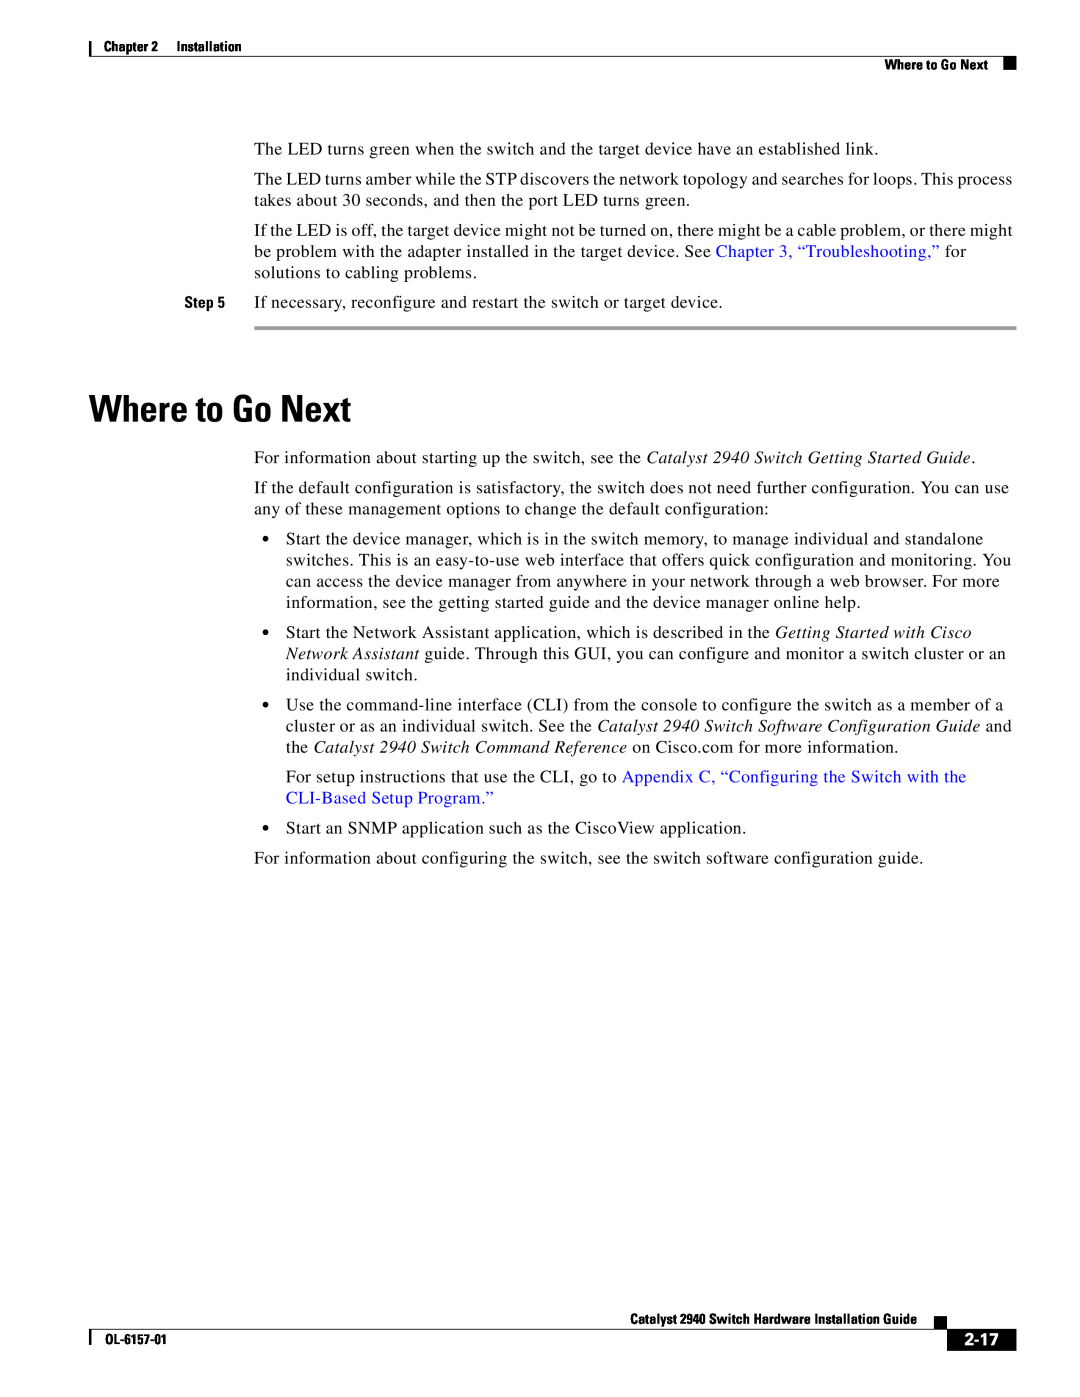 Cisco Systems OL-6157-01 manual Where to Go Next, 2-17 